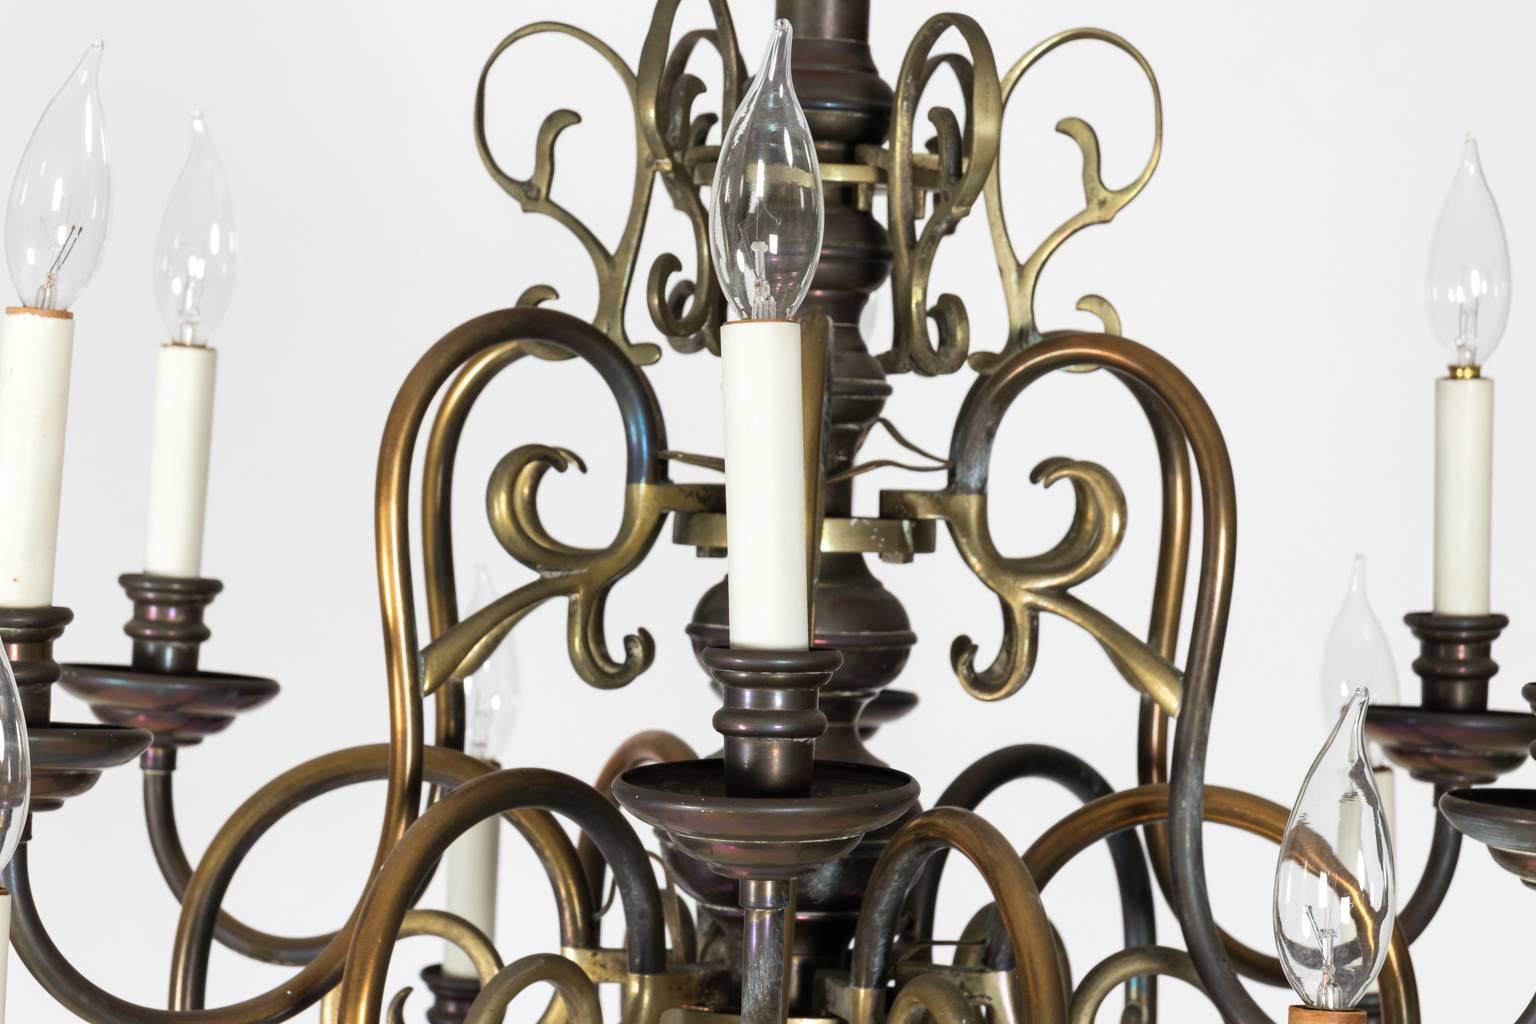 Dutch goose neck chandelier in bronze, circa late 18th century.
         